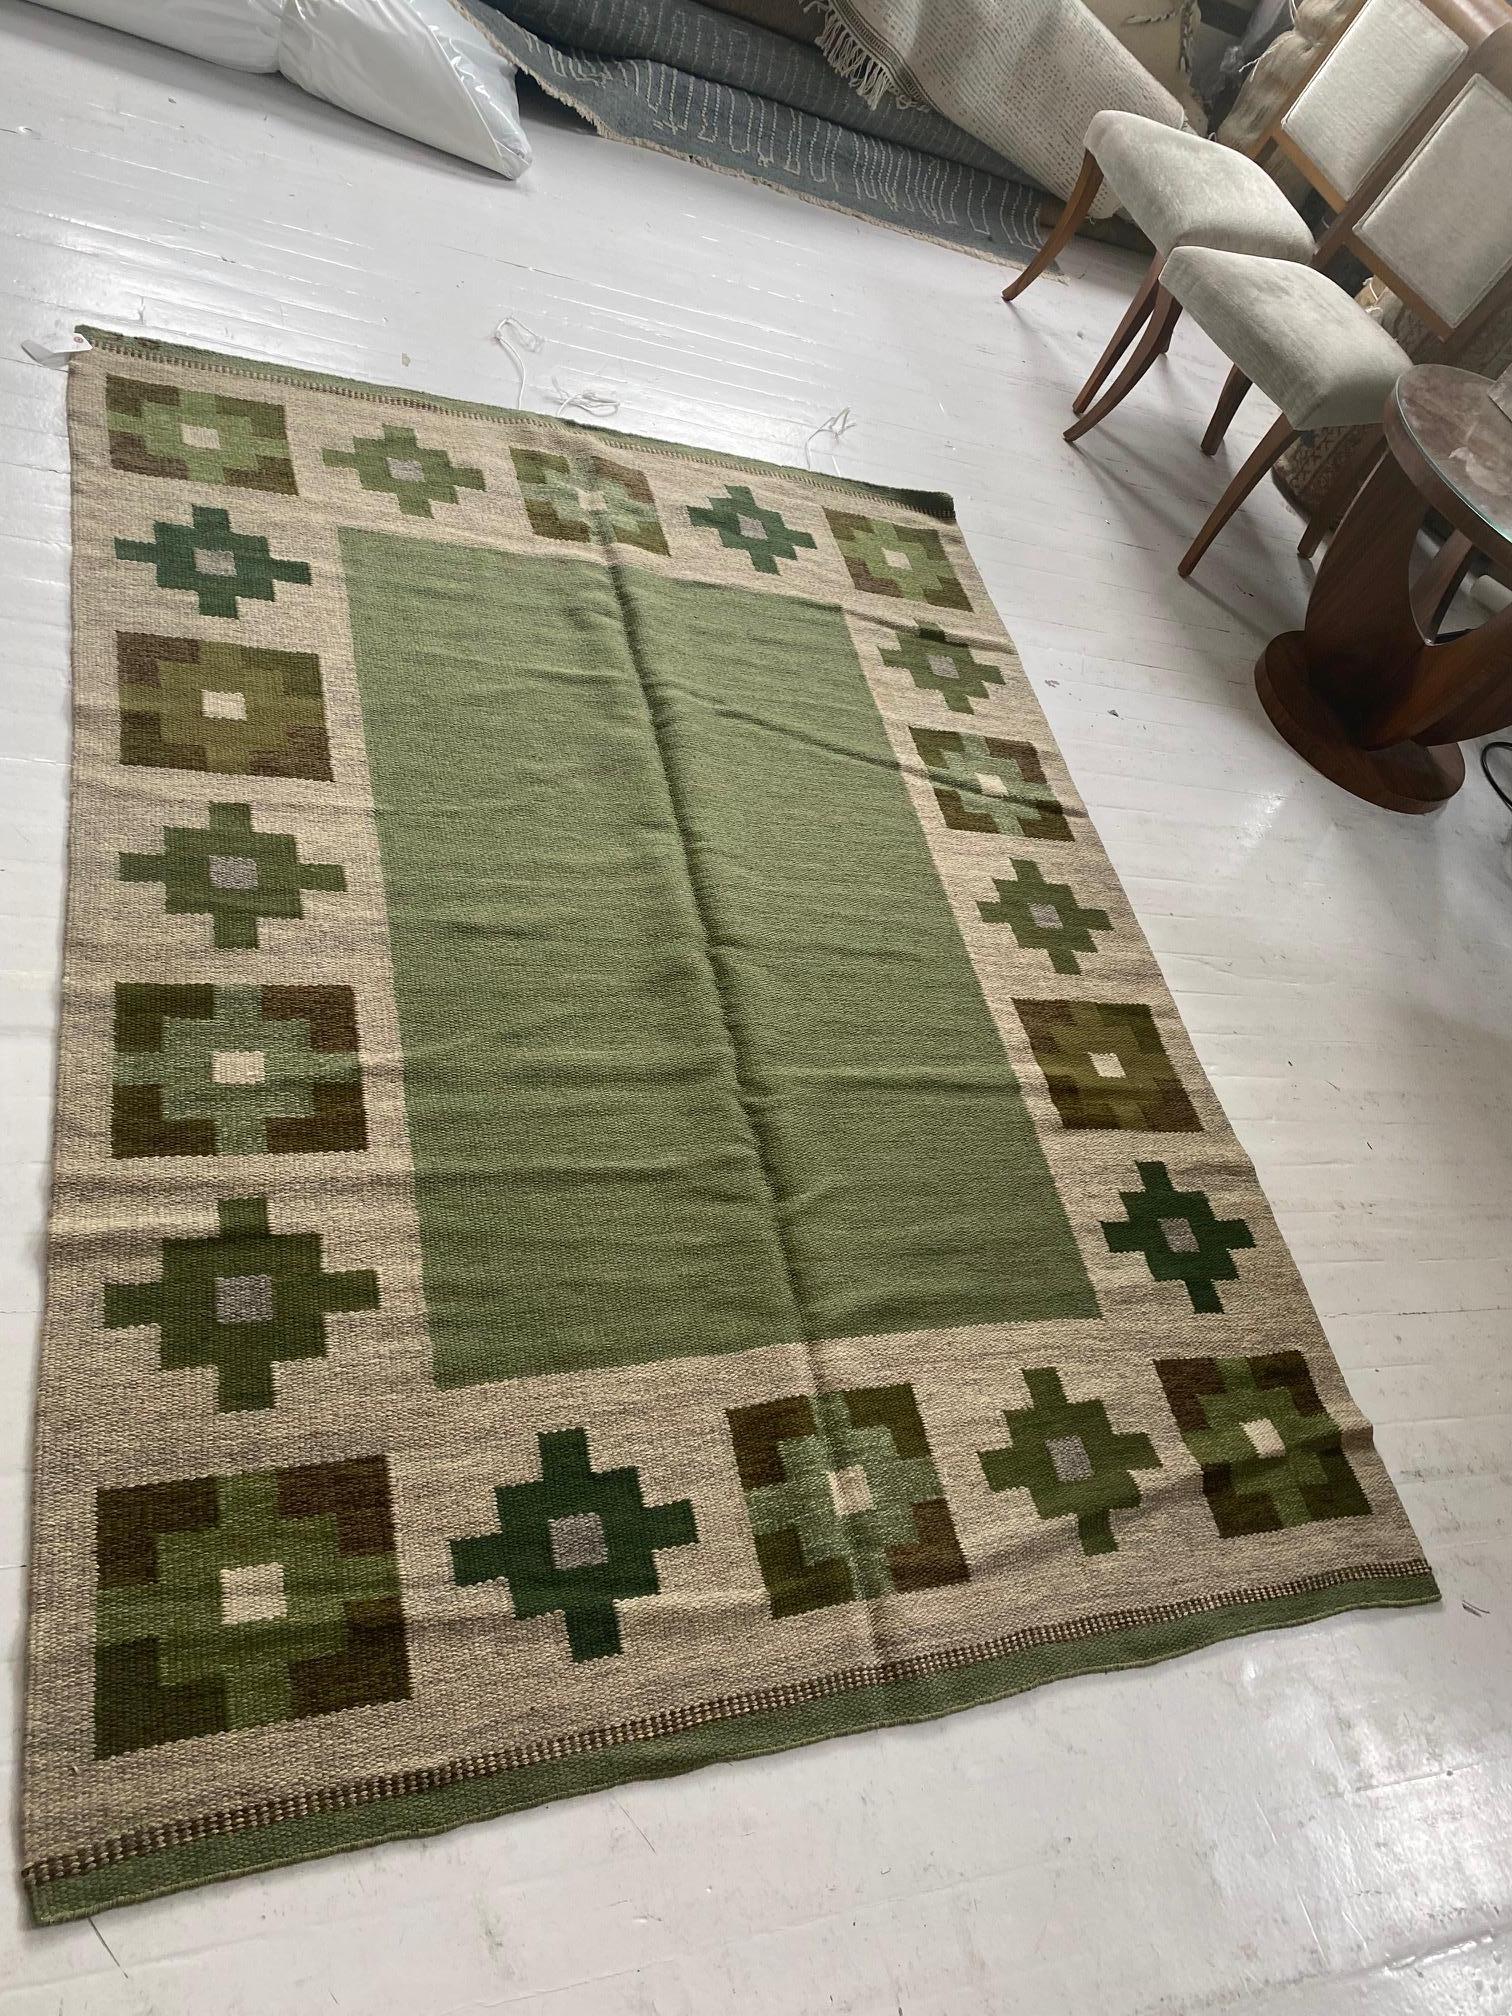 High-quality vintage Swedish beige, green flat weave wool rug
Size: 5'6